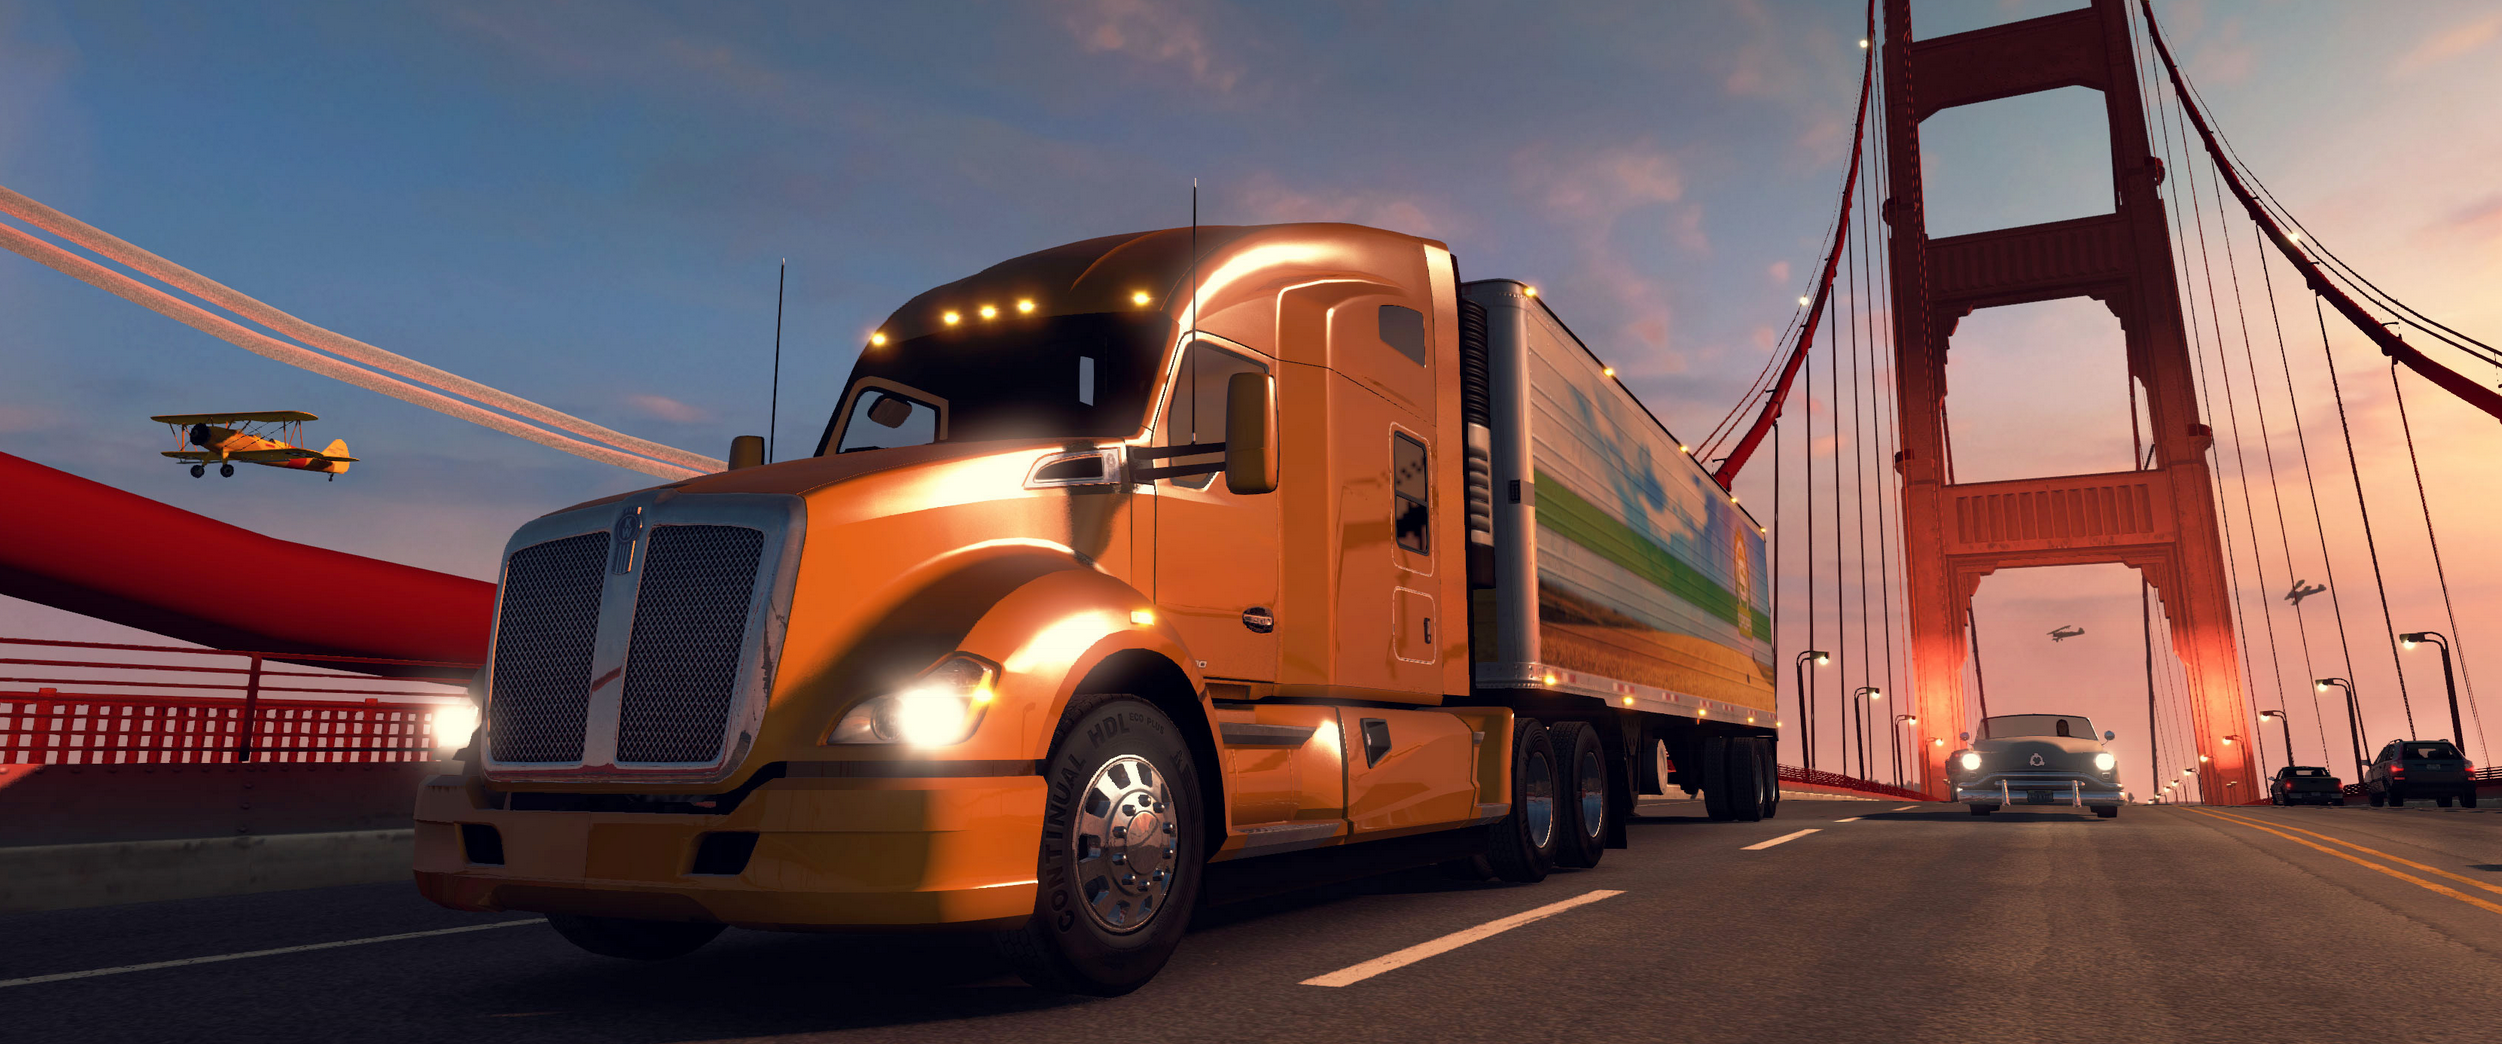 American Truck Simulator - Teaser Trailer + Screenshots